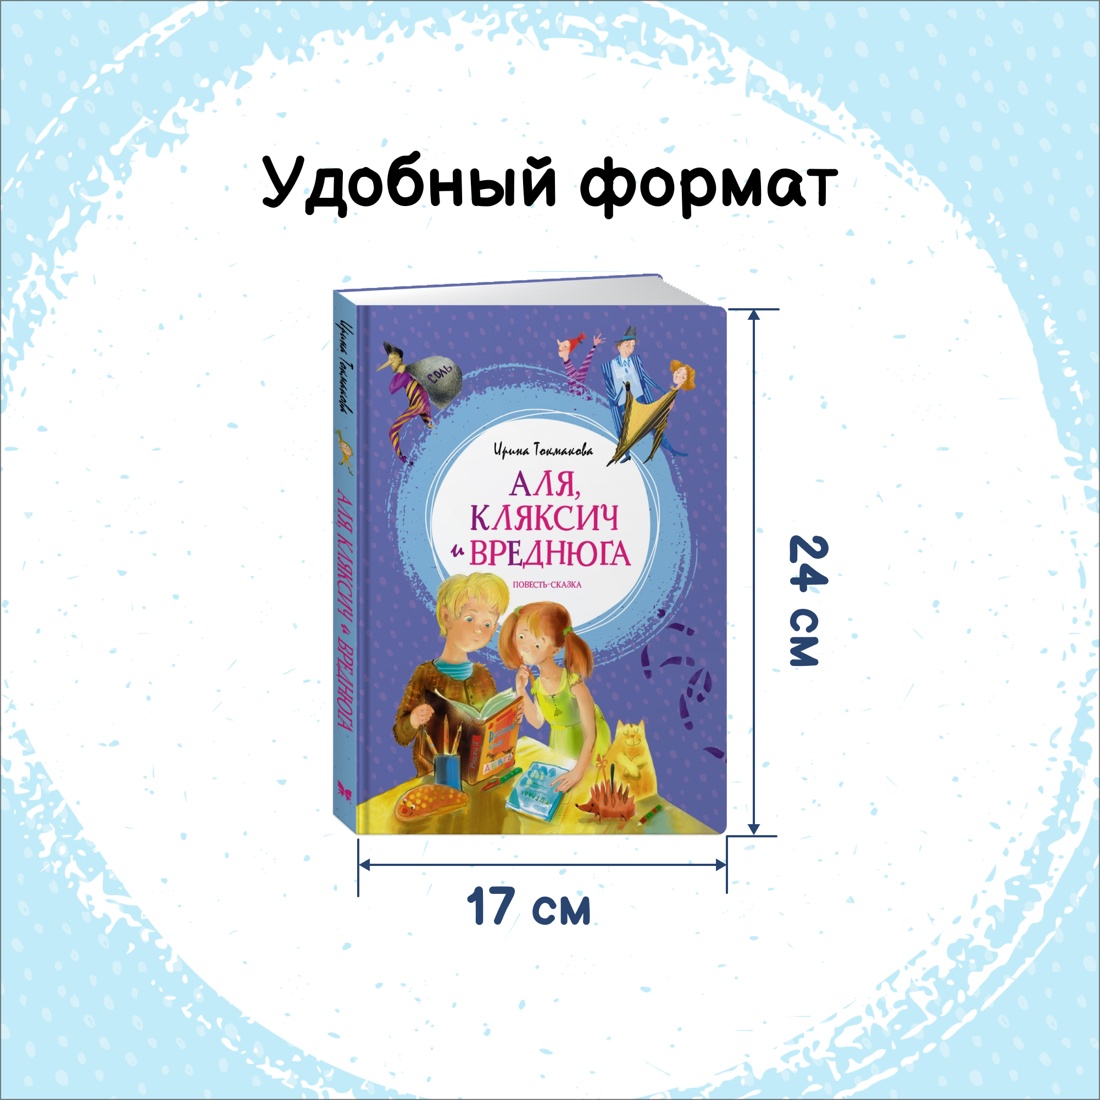 Промо материал к книге "Аля, Кляксич и Вреднюга" №1